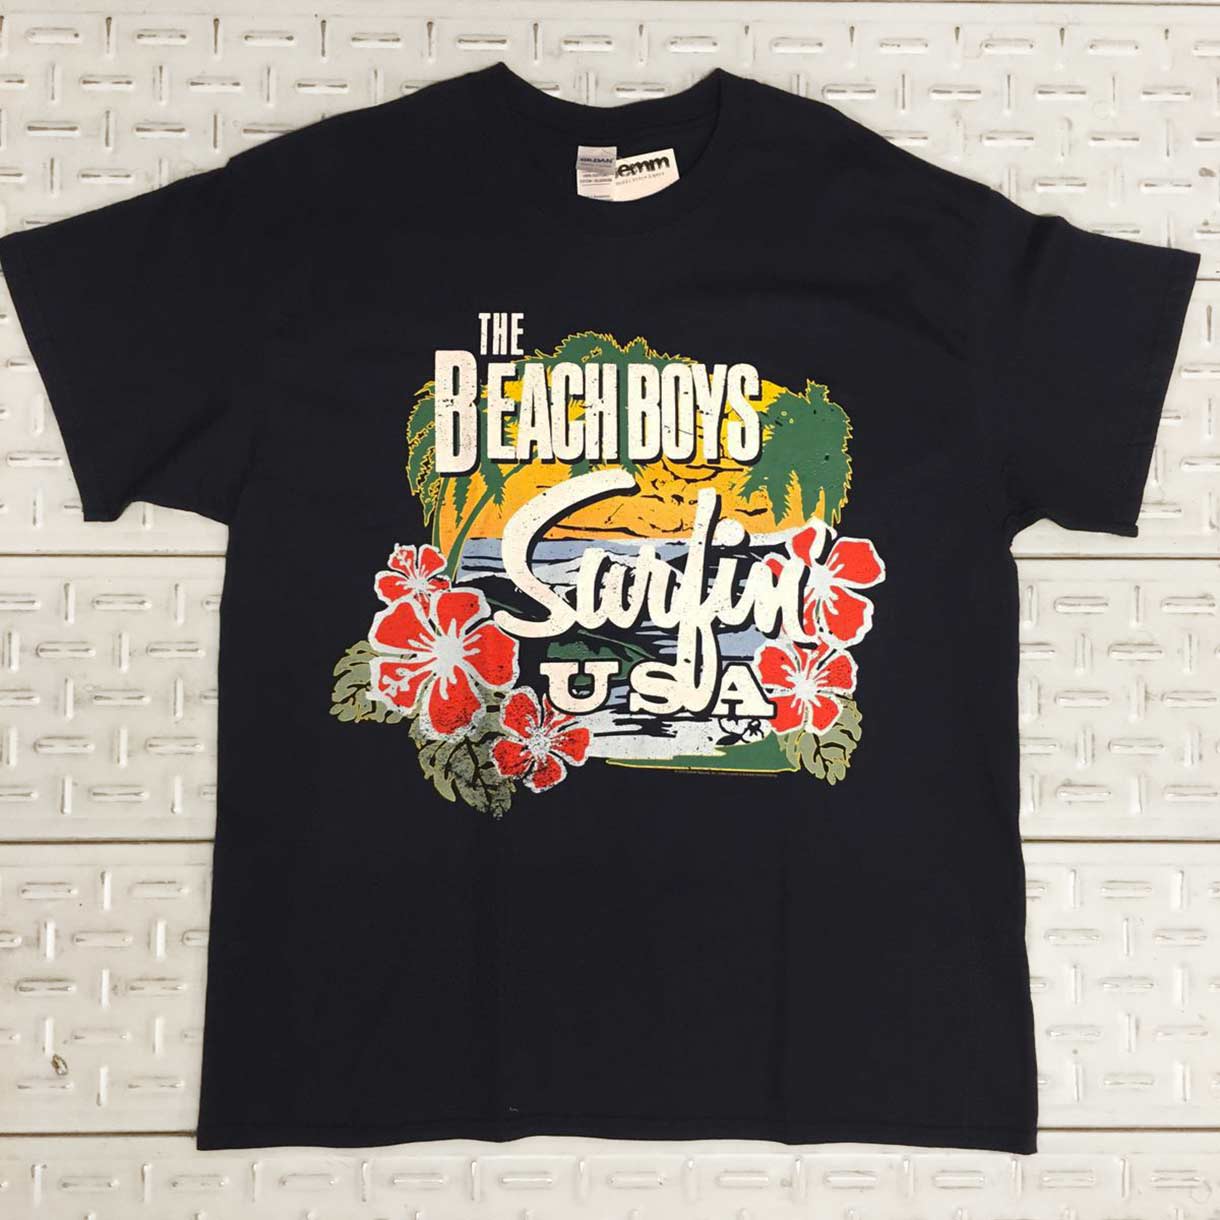 The BEACH BOYS | SEMM STORE